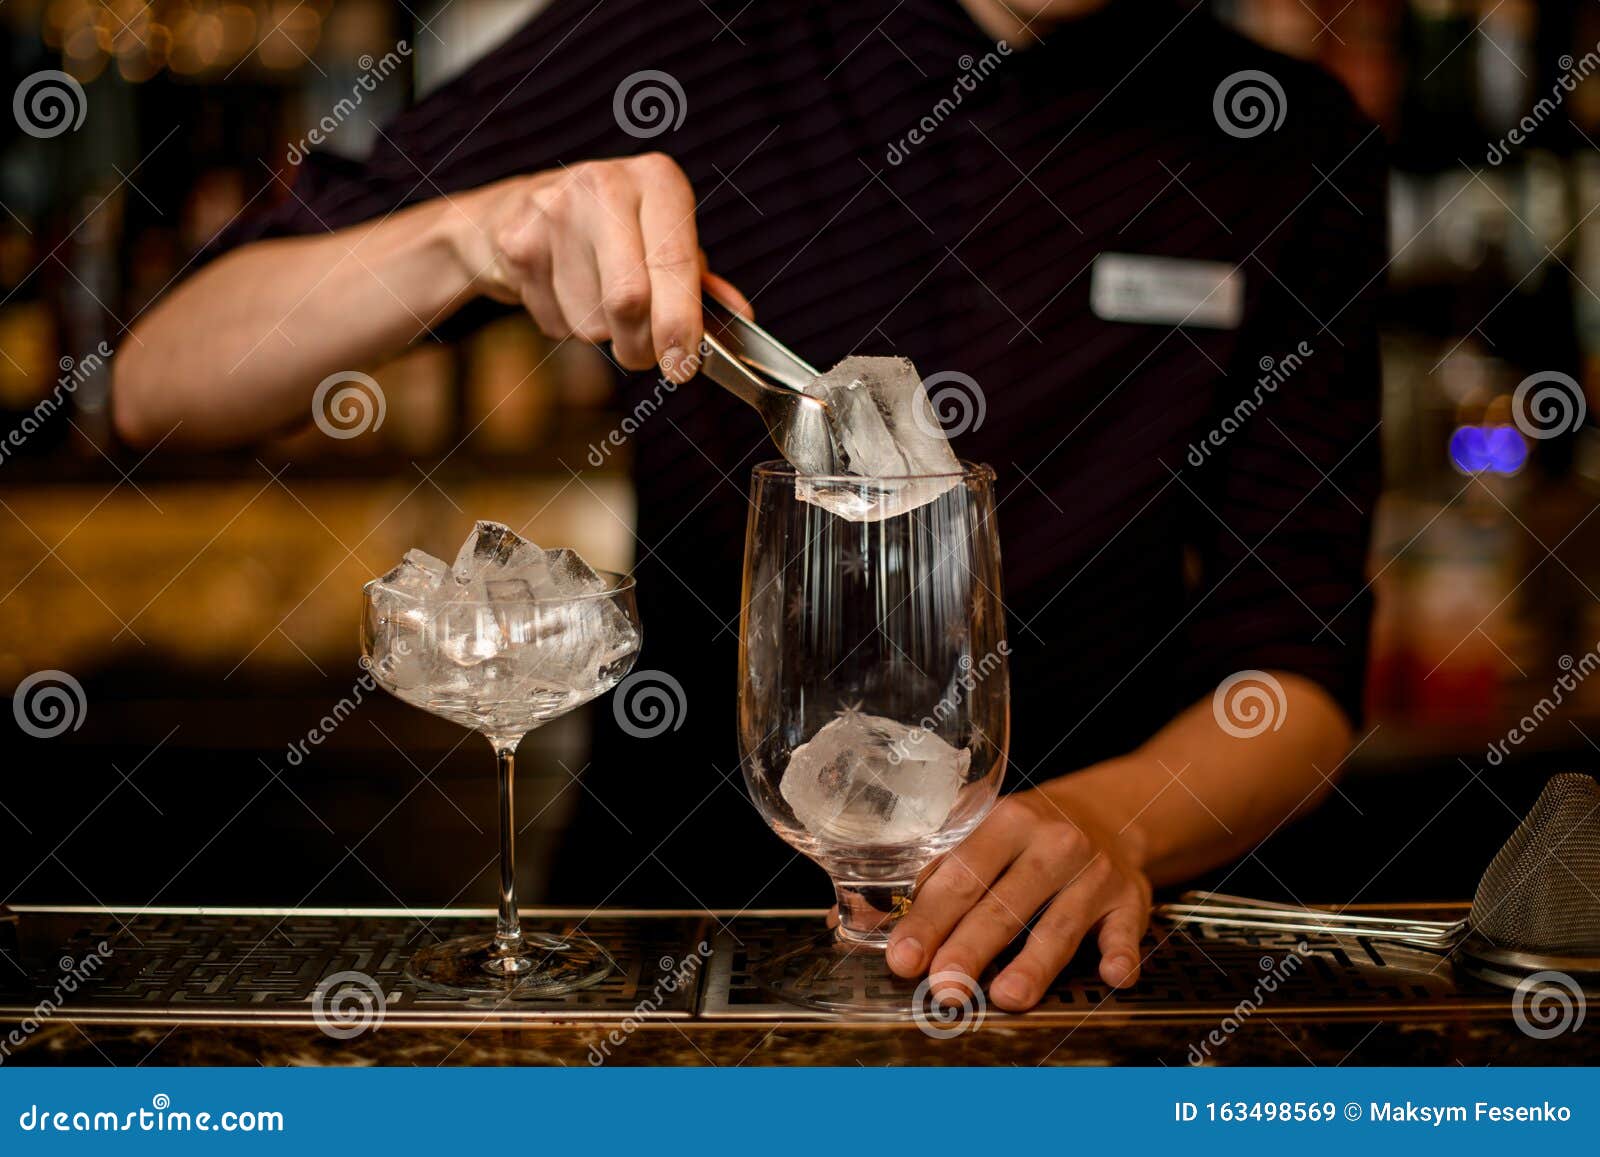 Бармен наливай пустой стакан. Бокалы бармена. Бармен стакан лёд. Стакан бармена. Бармен налей пустой стакан.